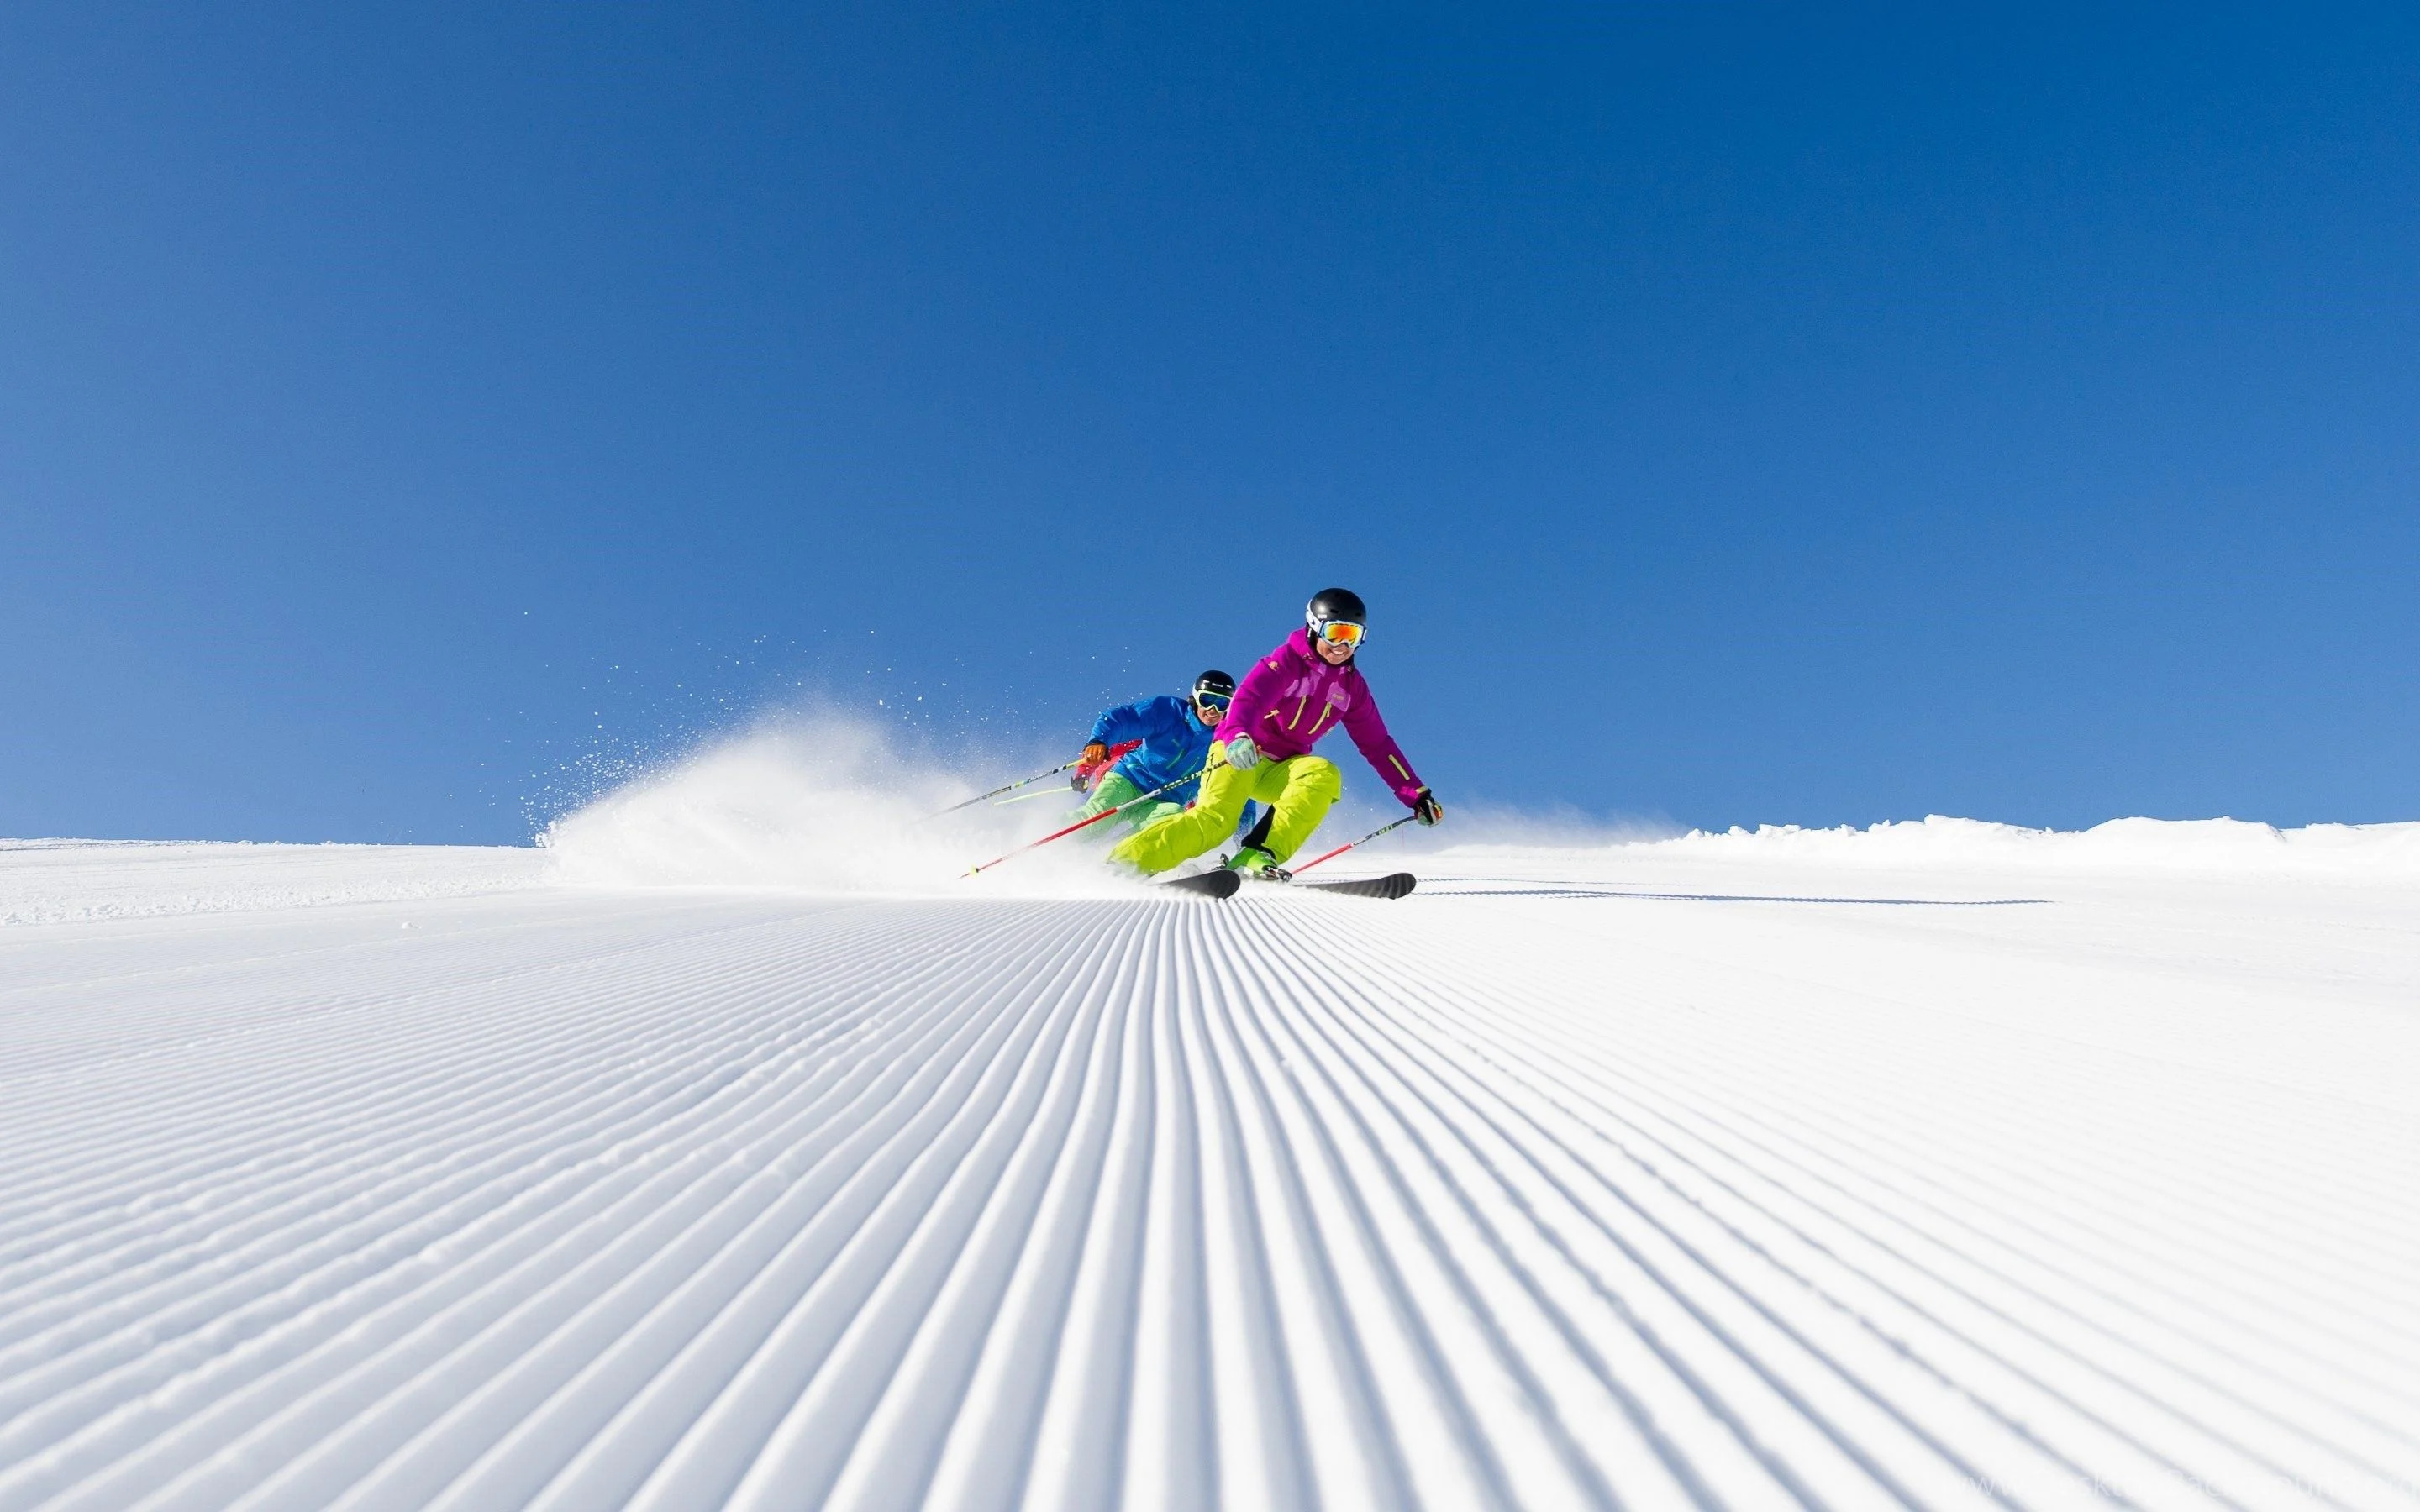 4K skiing wallpapers, Stunning winter scenery, High-resolution images, Alpine beauty, 2880x1800 HD Desktop